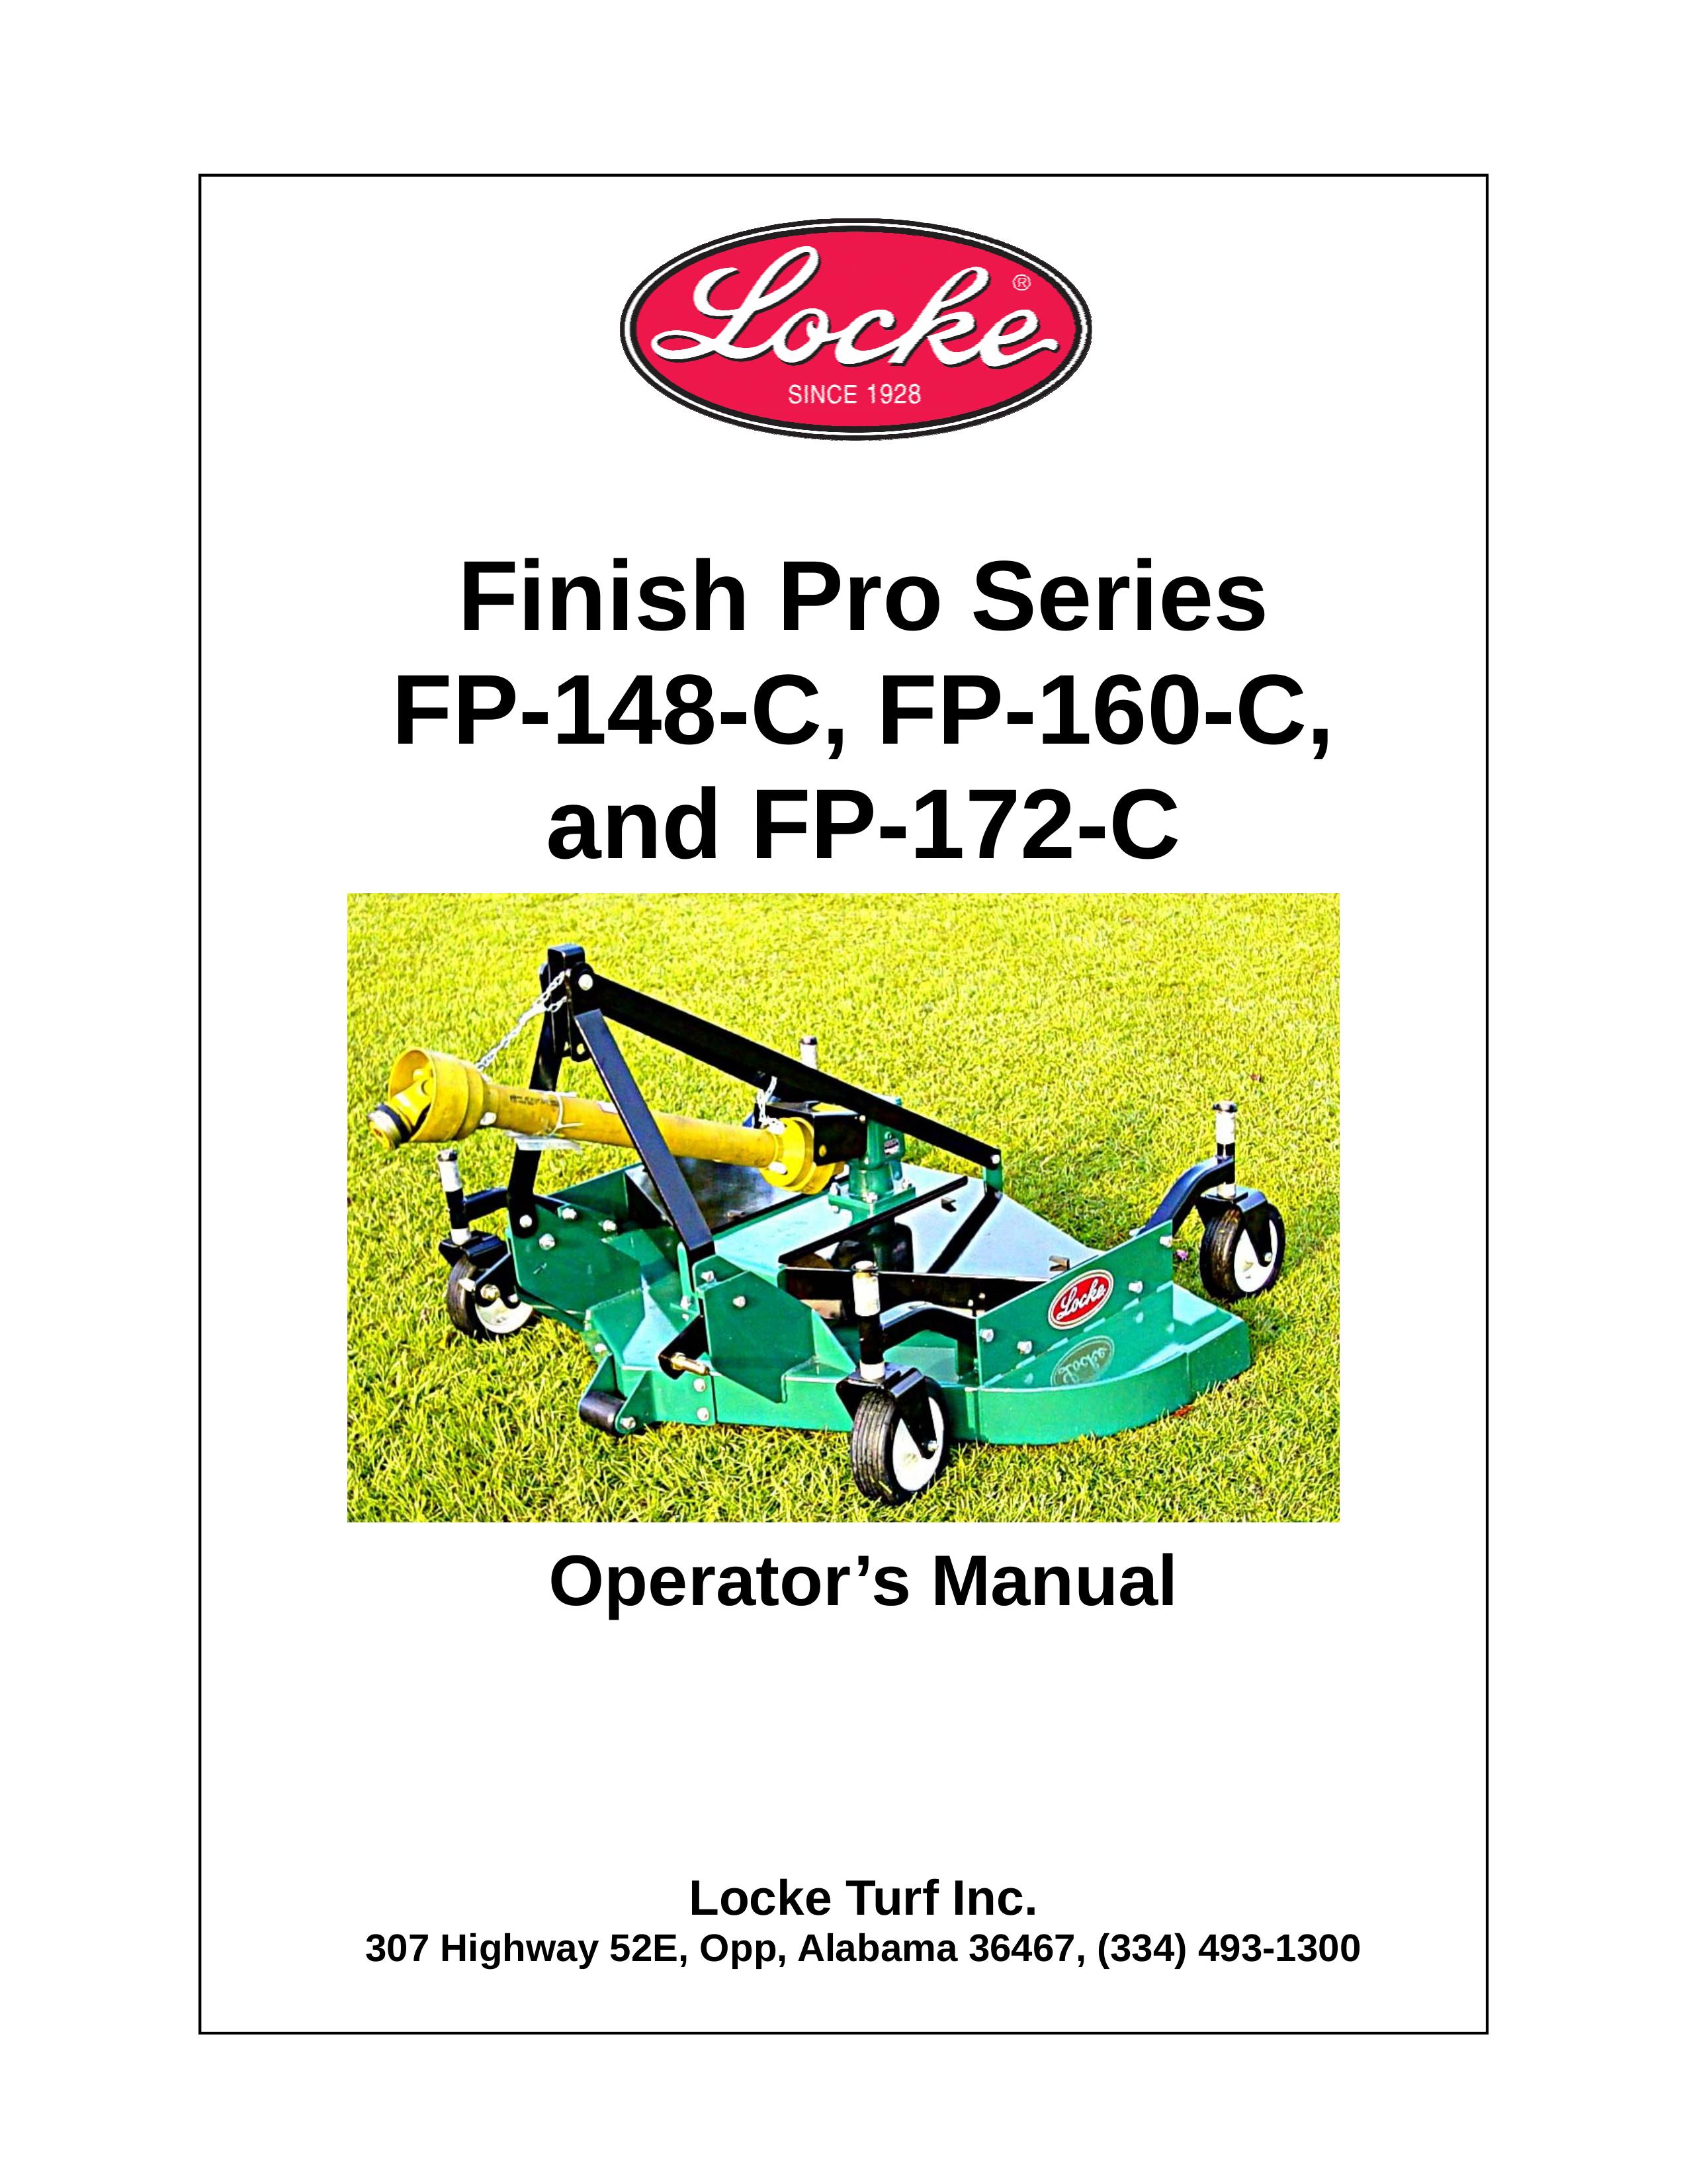 Locke FP-172-C Lawn Mower User Manual